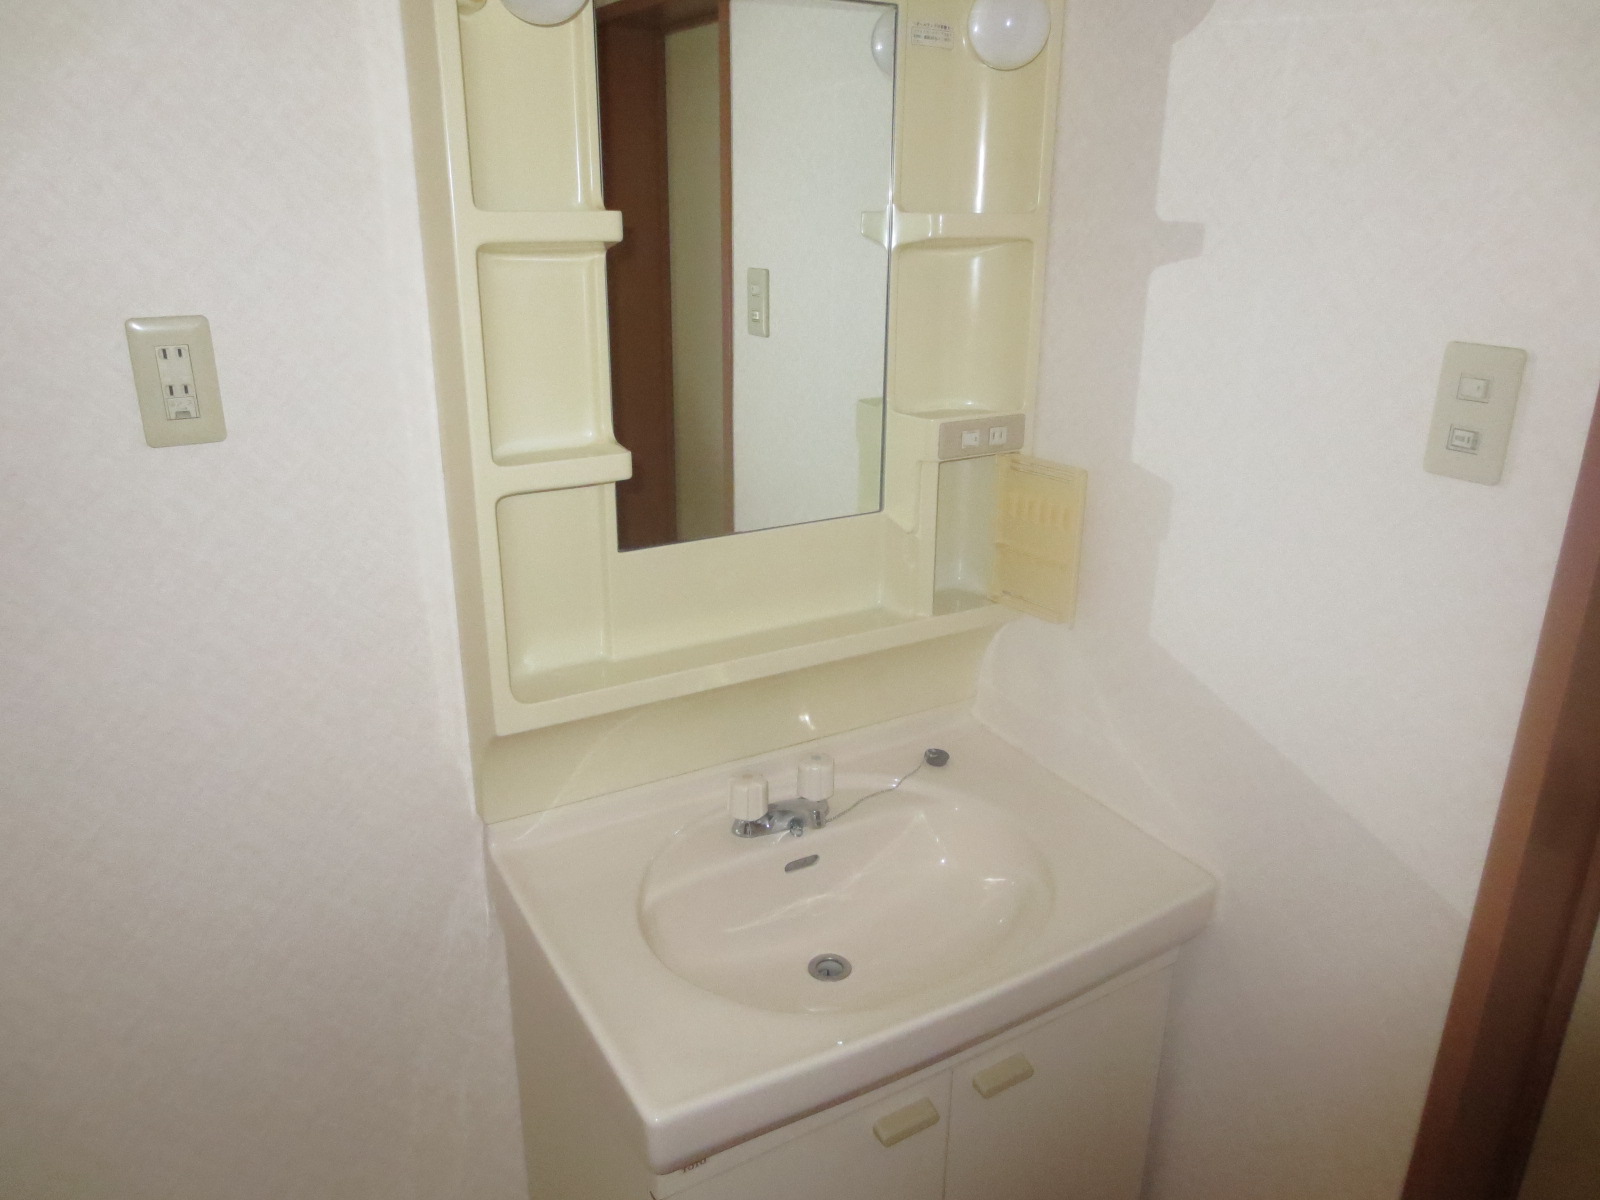 Washroom. It is a large mirror